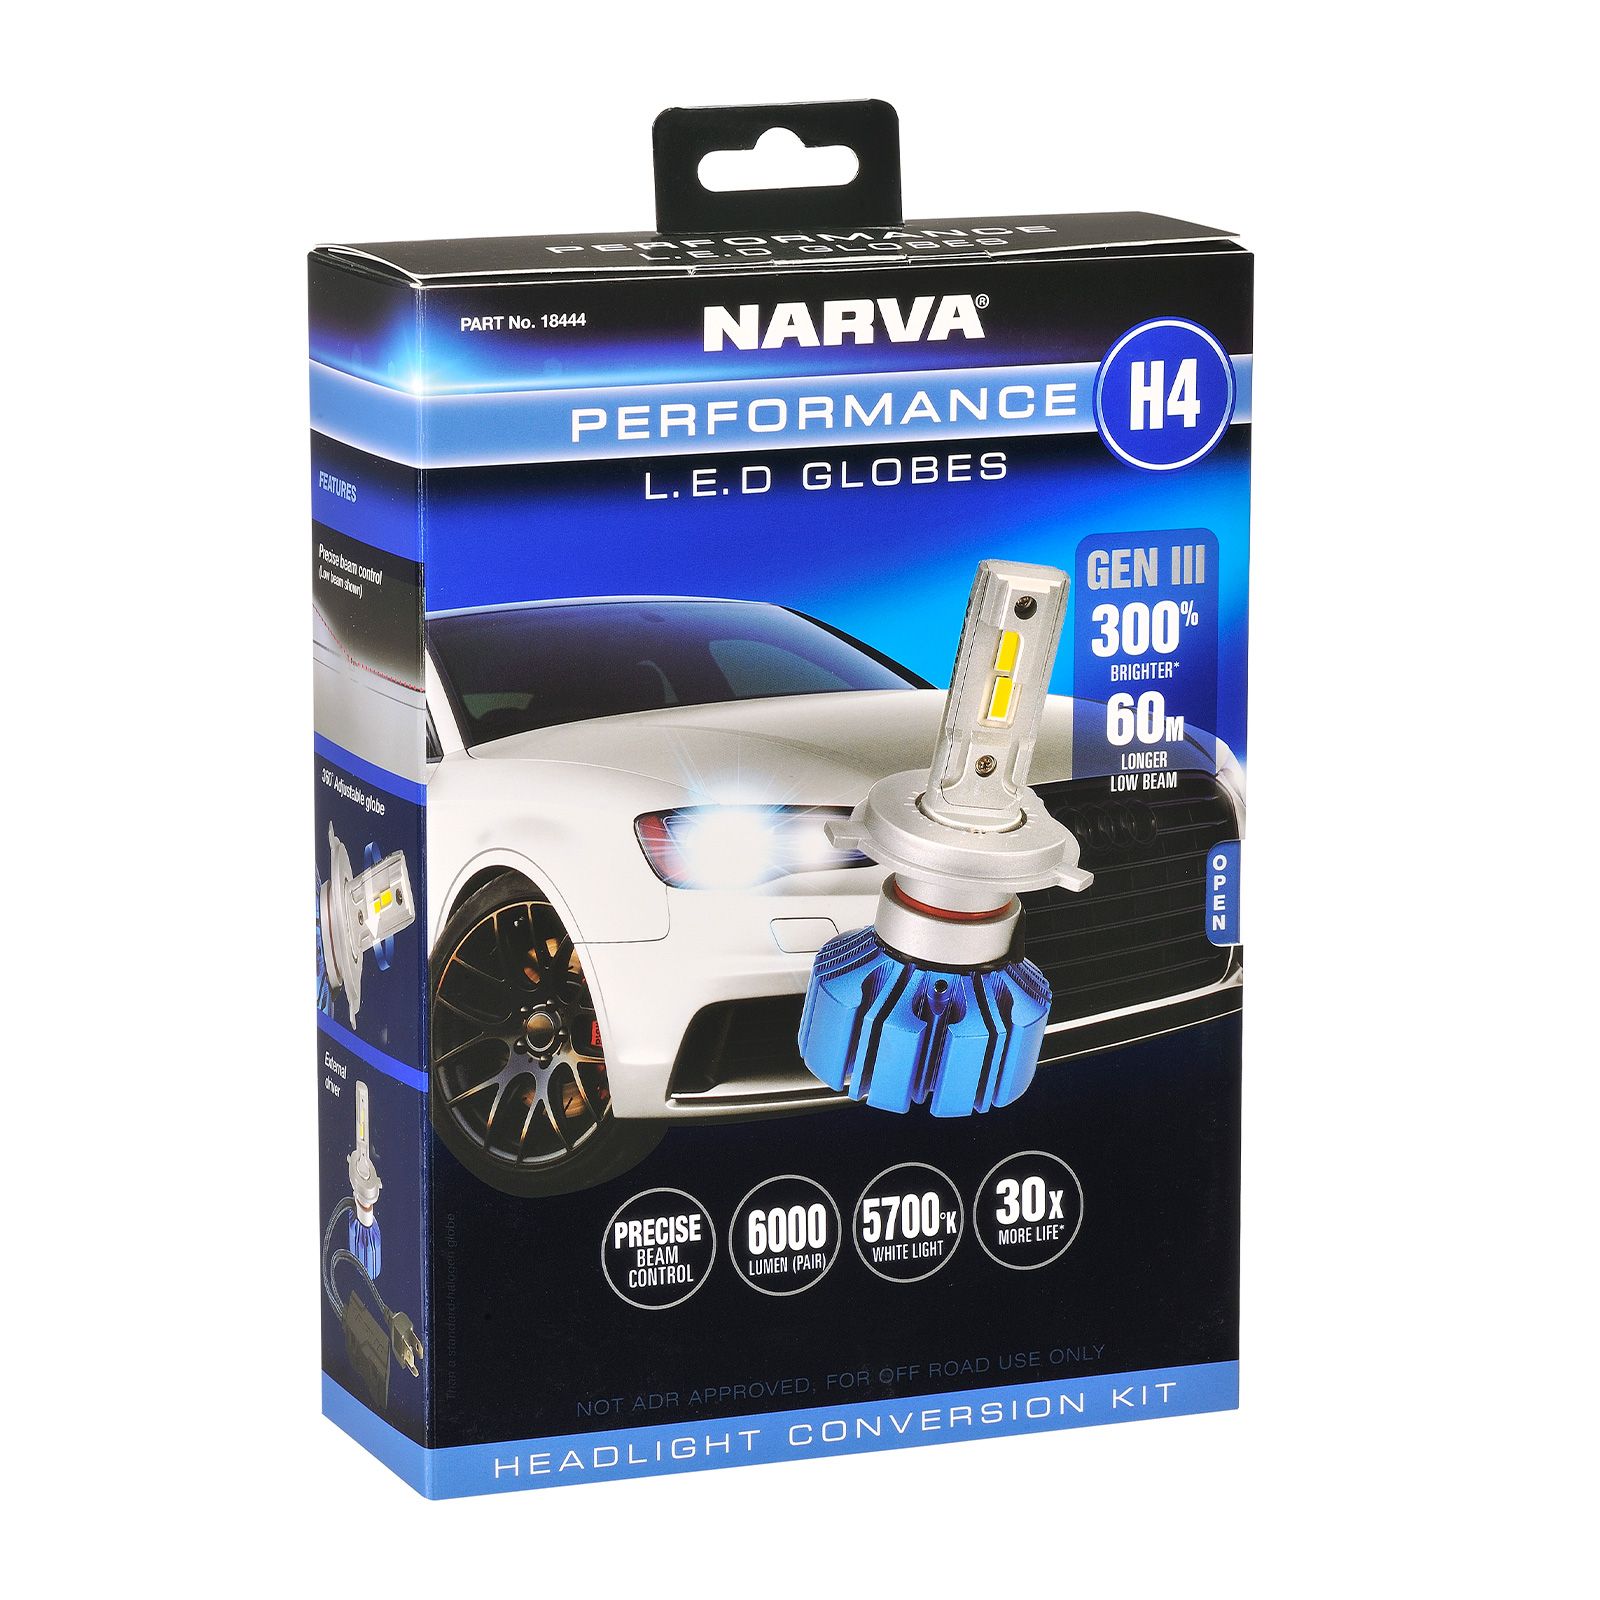 Narva  H4 Surefit LED Globes Gen II